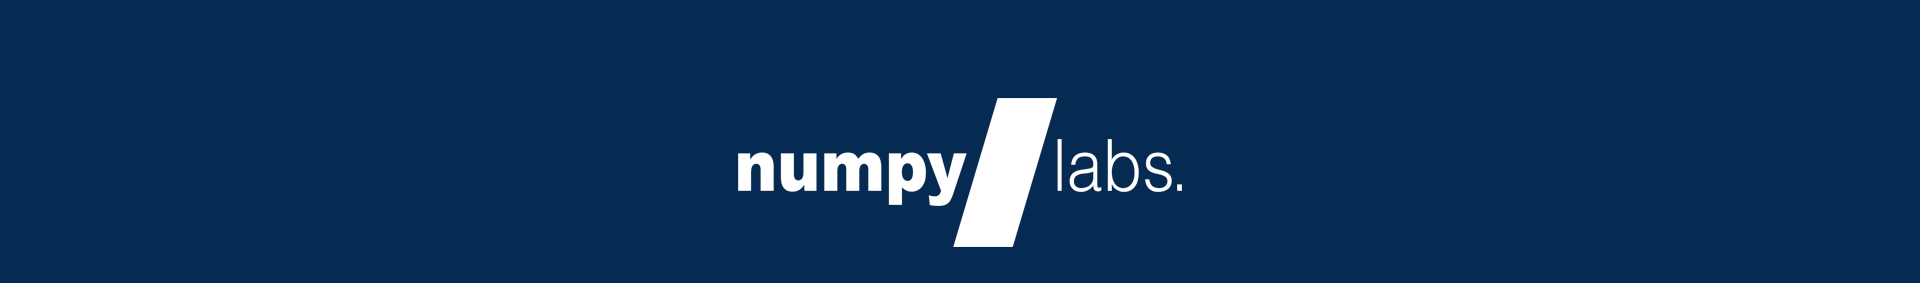 Numpy Labs LLC's profile banner